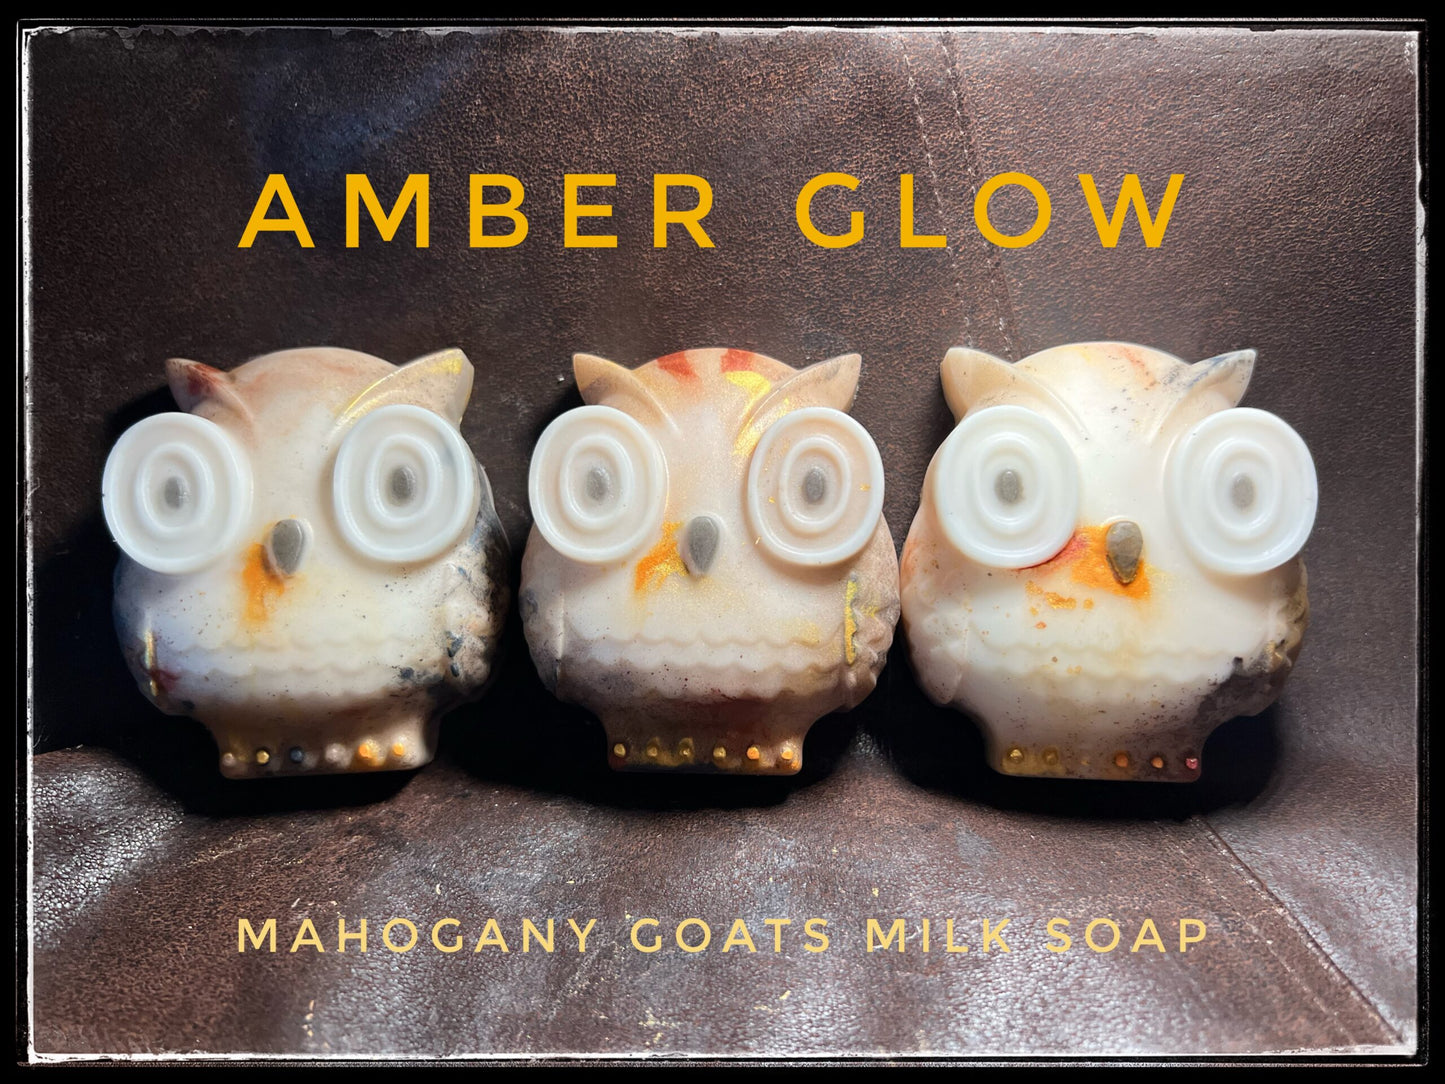 Amber Glow Mahogony Goats Milk Soap